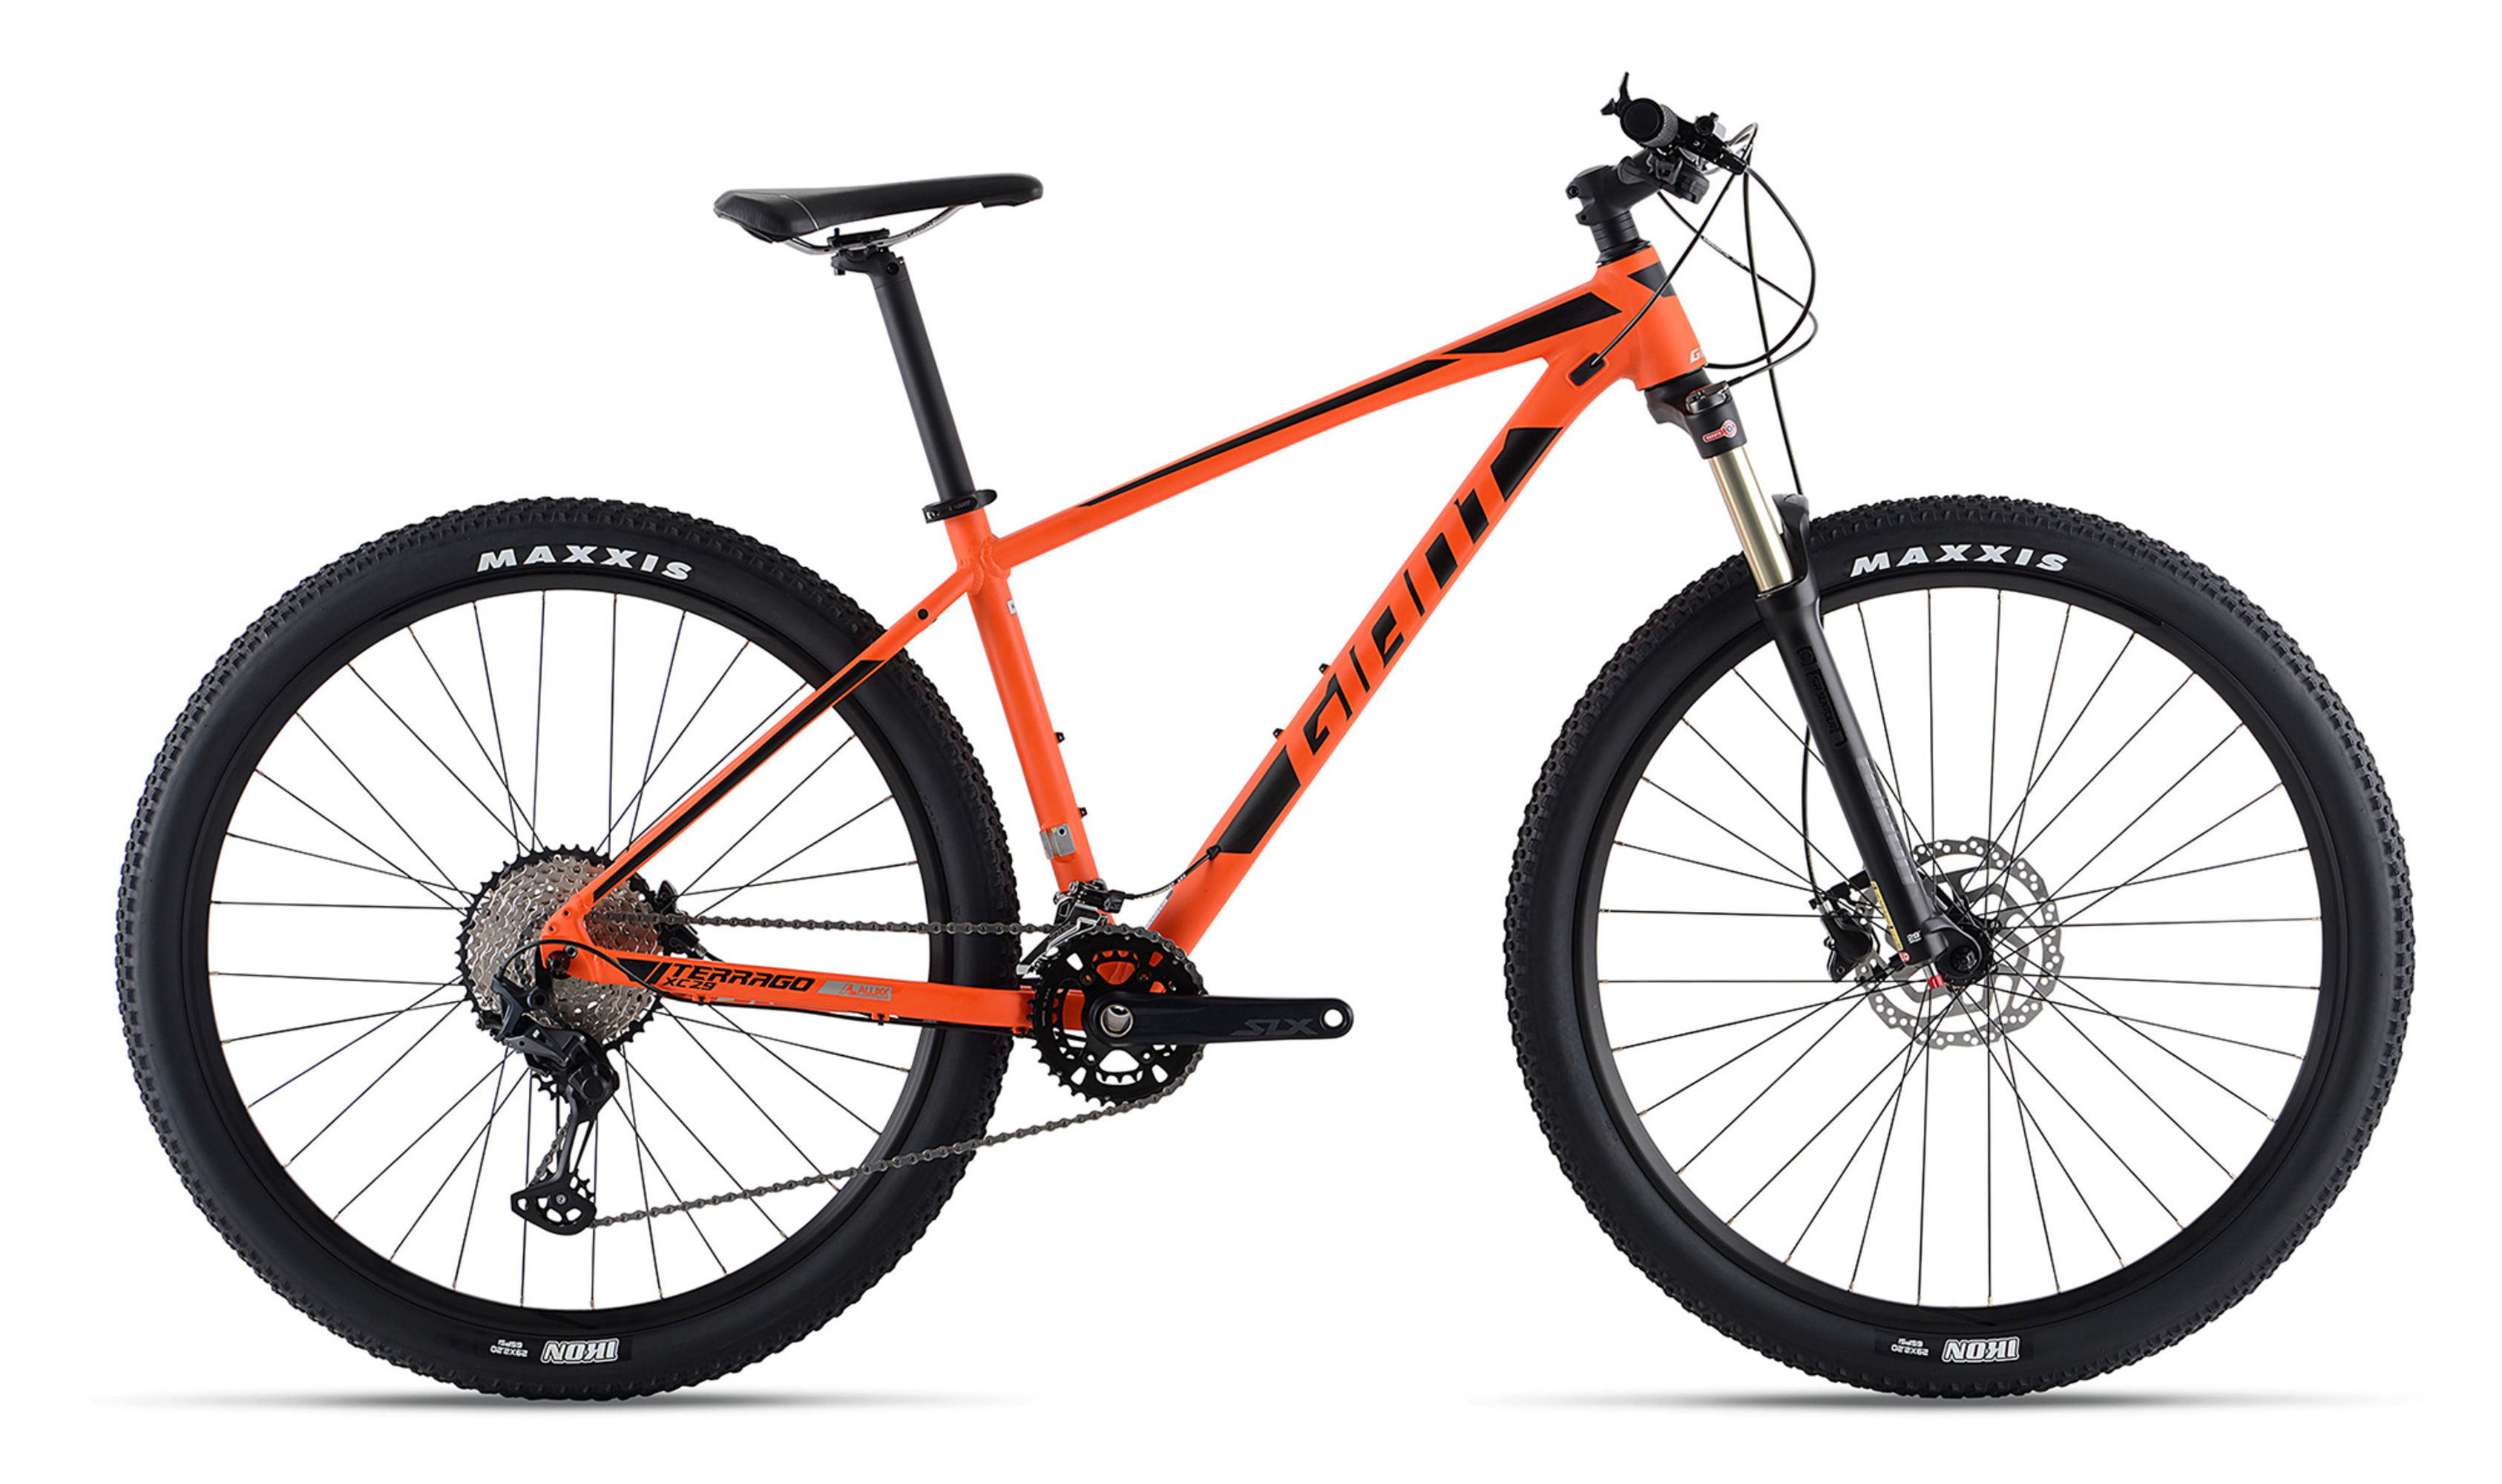  Отзывы о Горном велосипеде Giant Terrago 29 2 2020